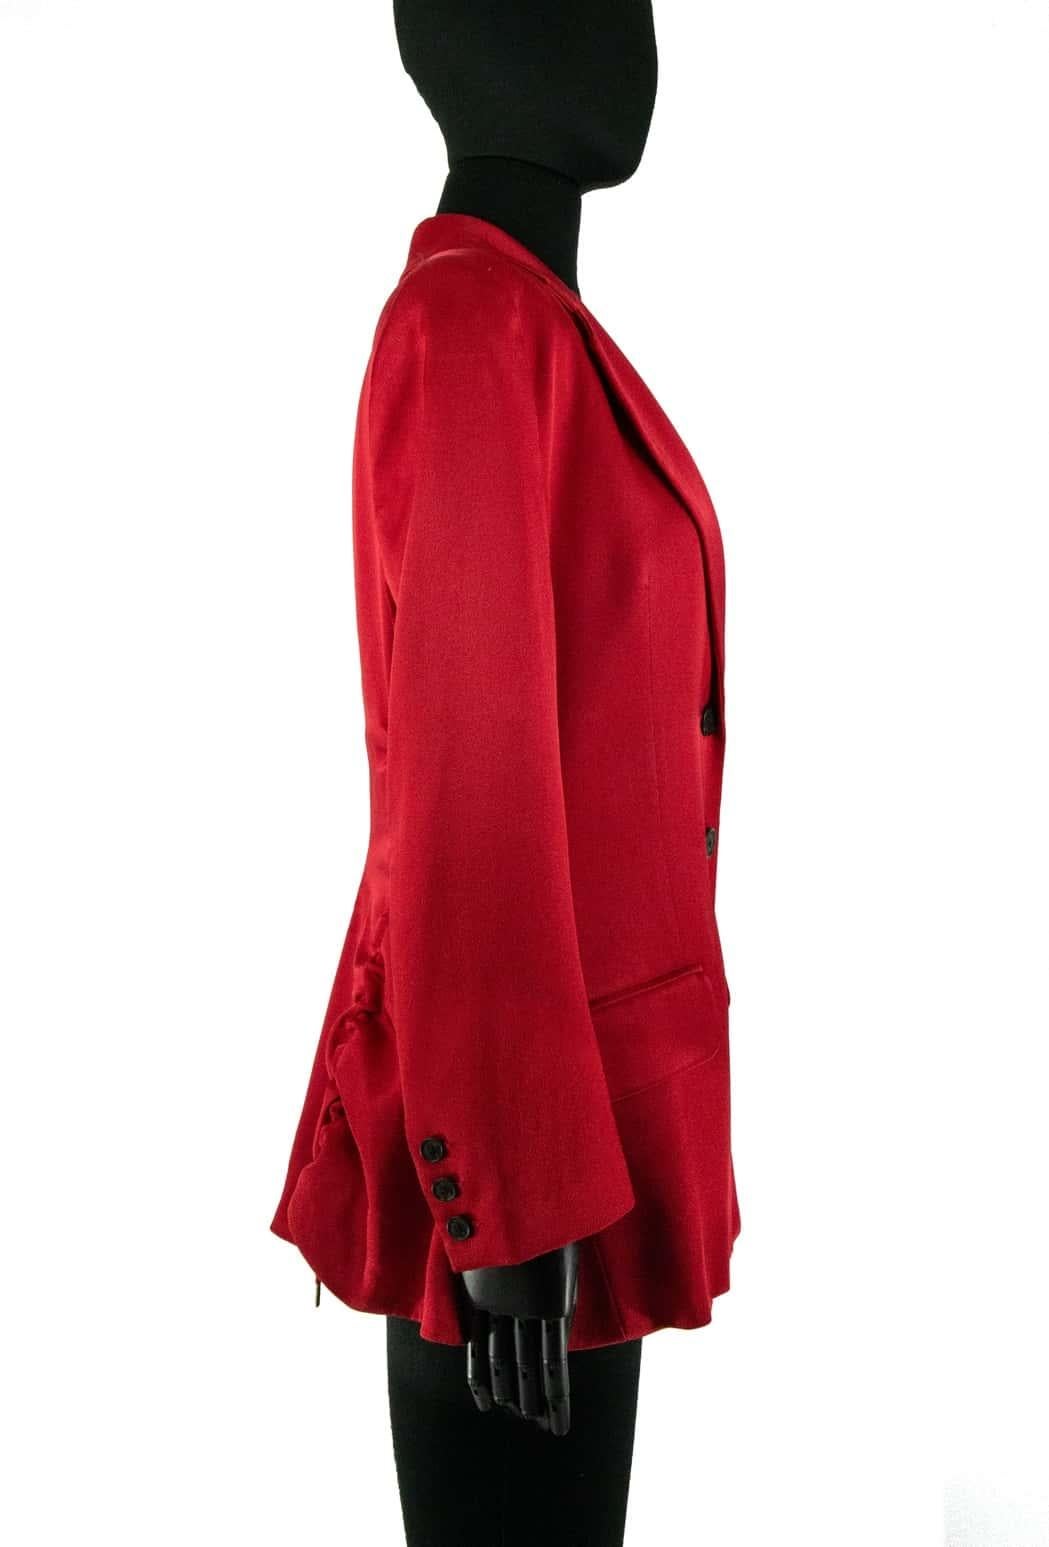 John Galliano Autumn 2001 Red Satin Blazer For Sale 1